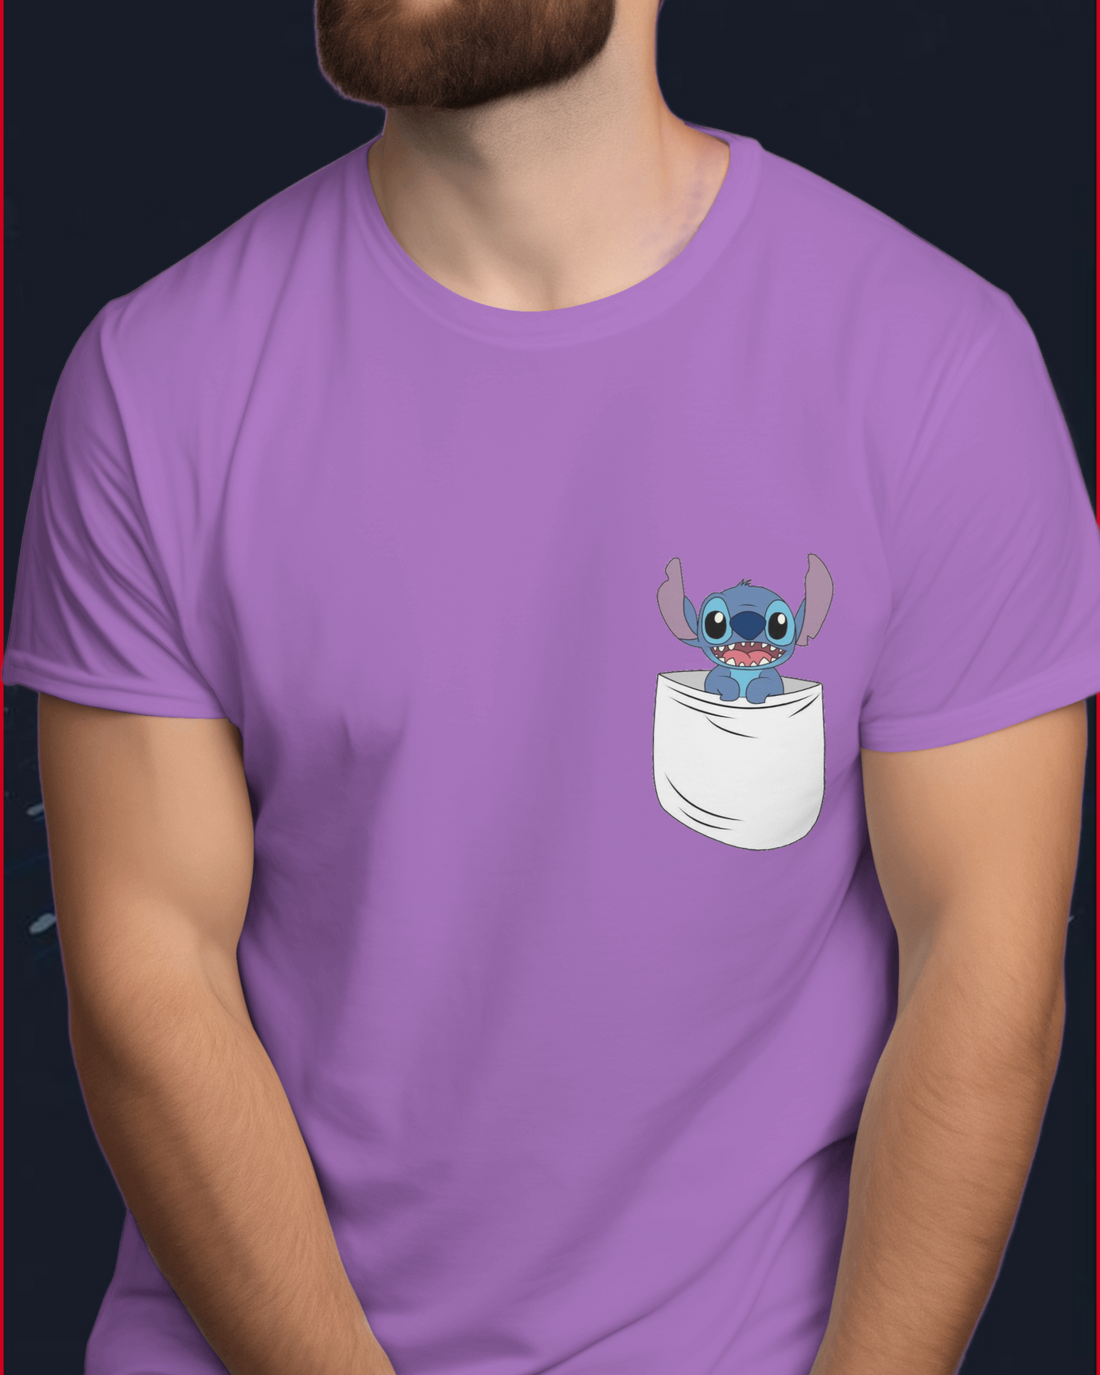 Half Sleeves Pocket Printed T-Shirts (Purple)